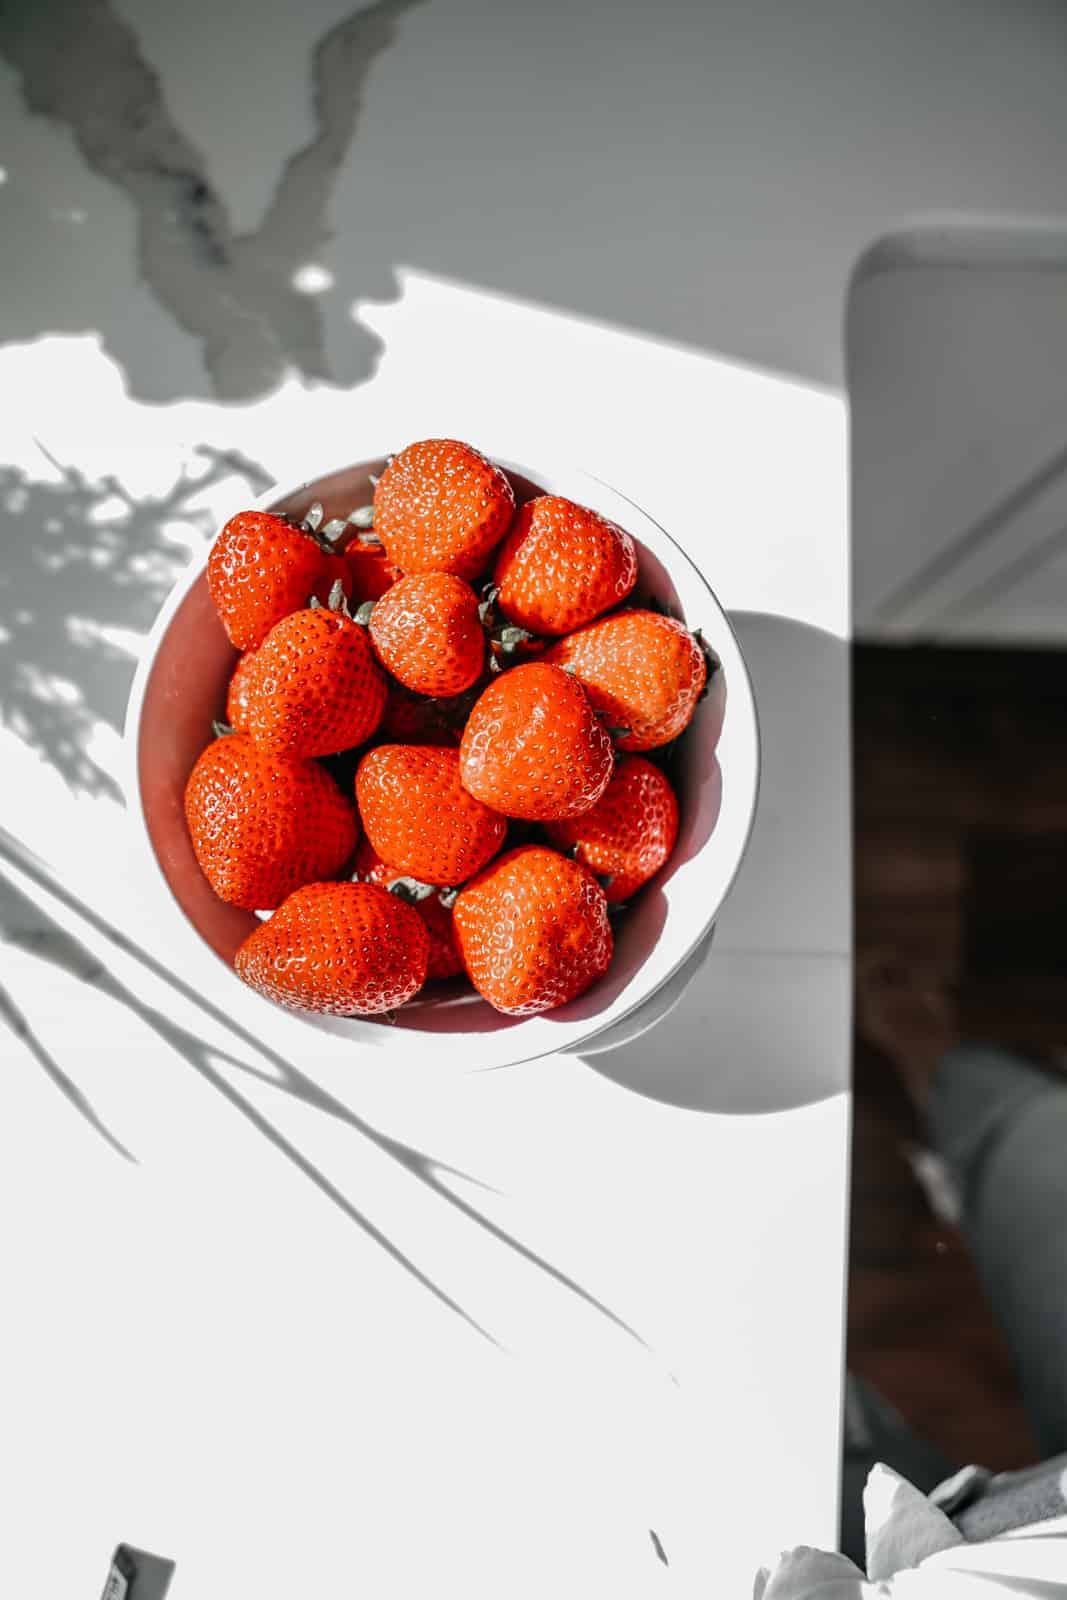 Big bowl of fresh strawberries on counter